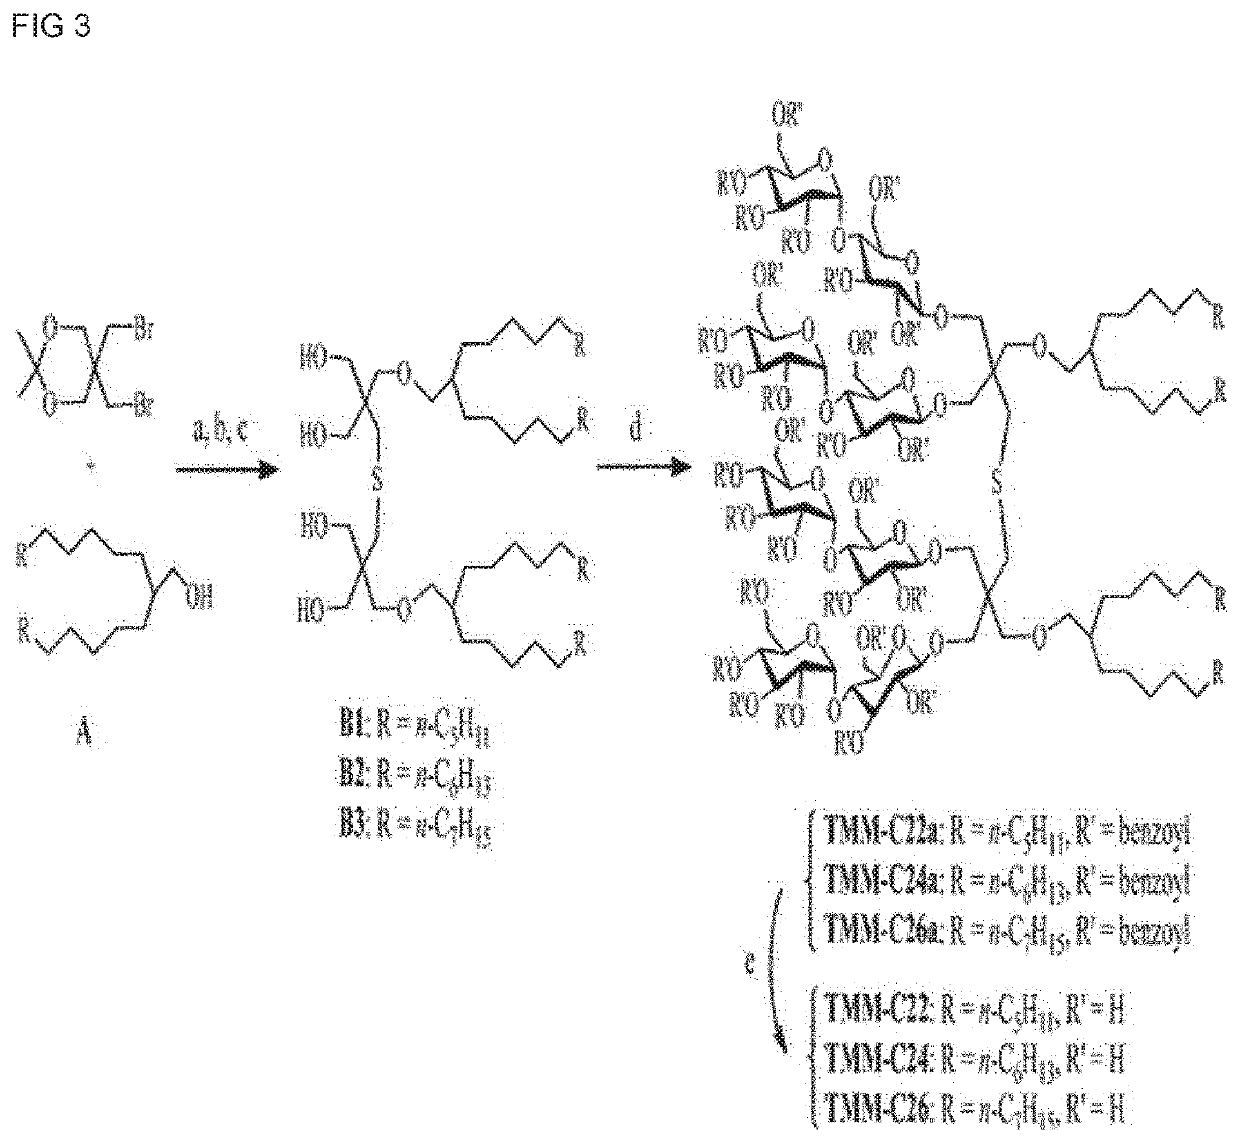 Novel amphipathic molecule based on tandem malonate and use thereof